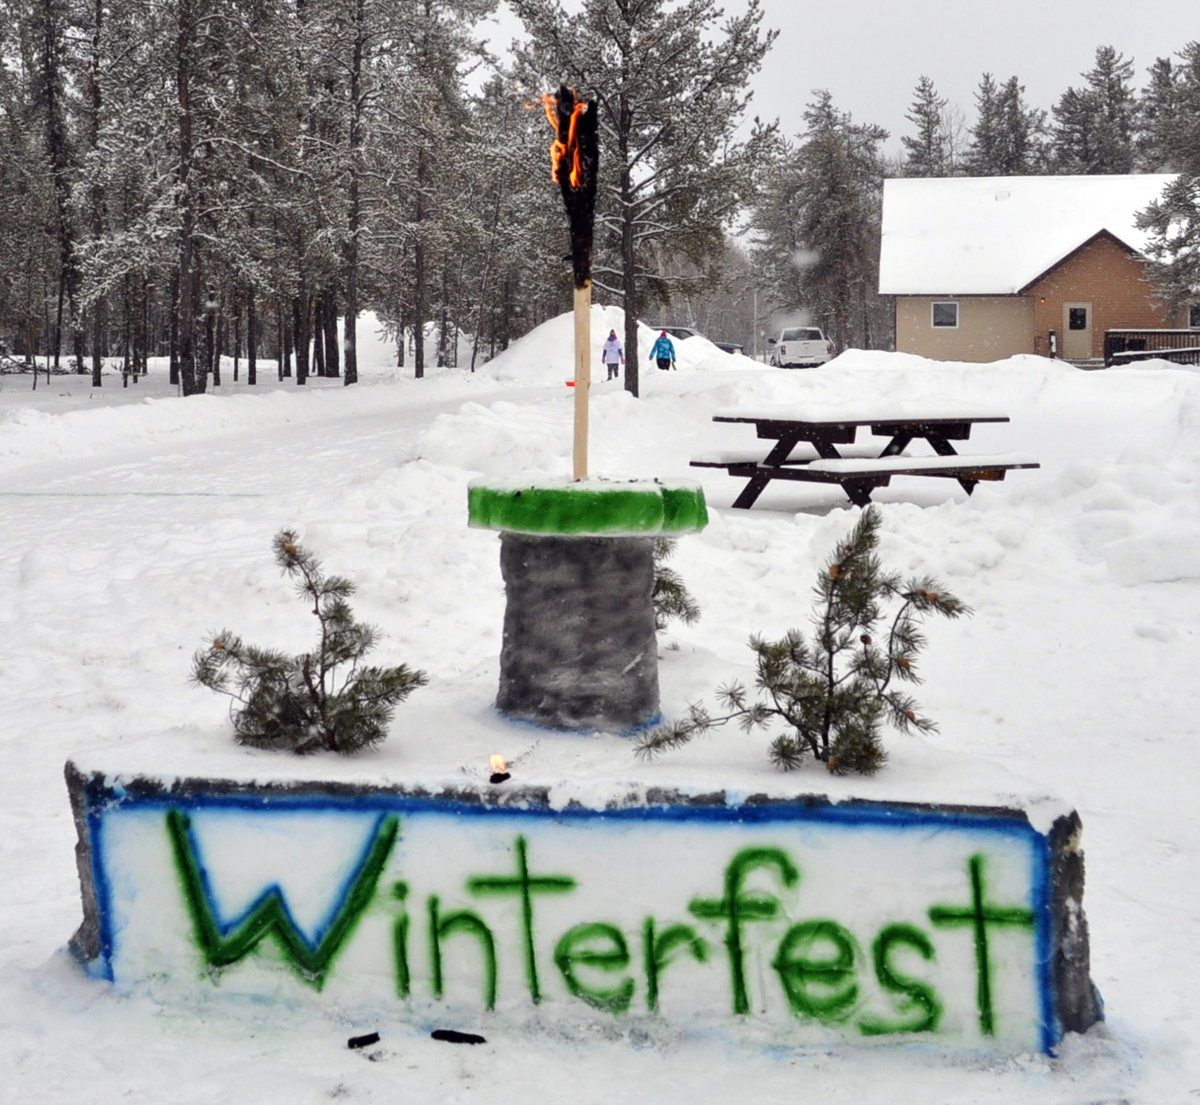 Northern Winter Festival